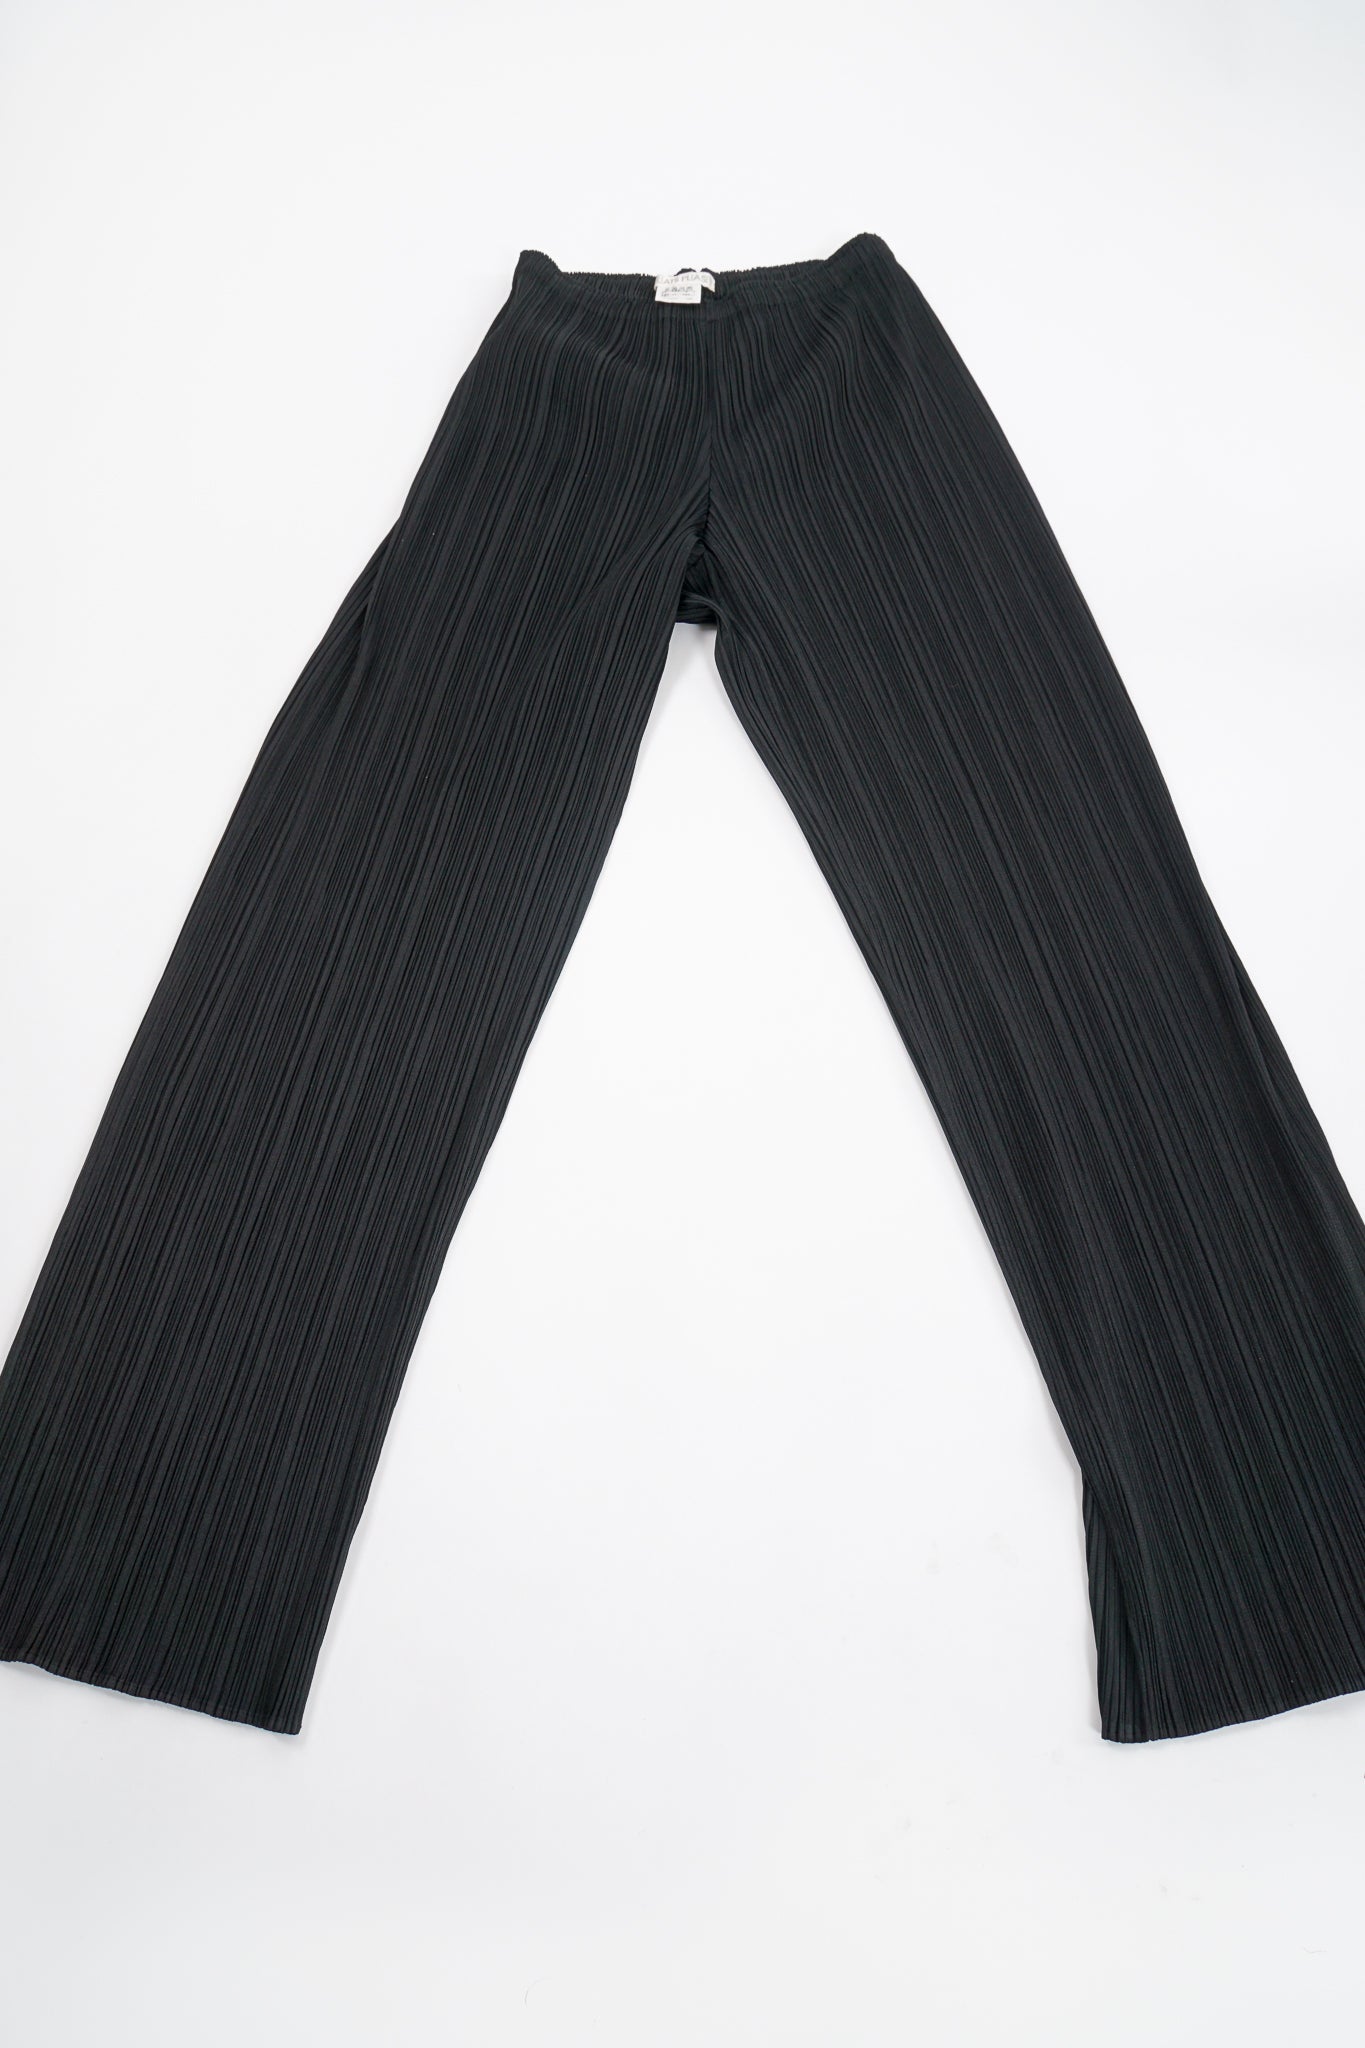 Vintage Issey Miyake Pleats Please Black Pleated Ankle Pant flat at Recess Los Angeles